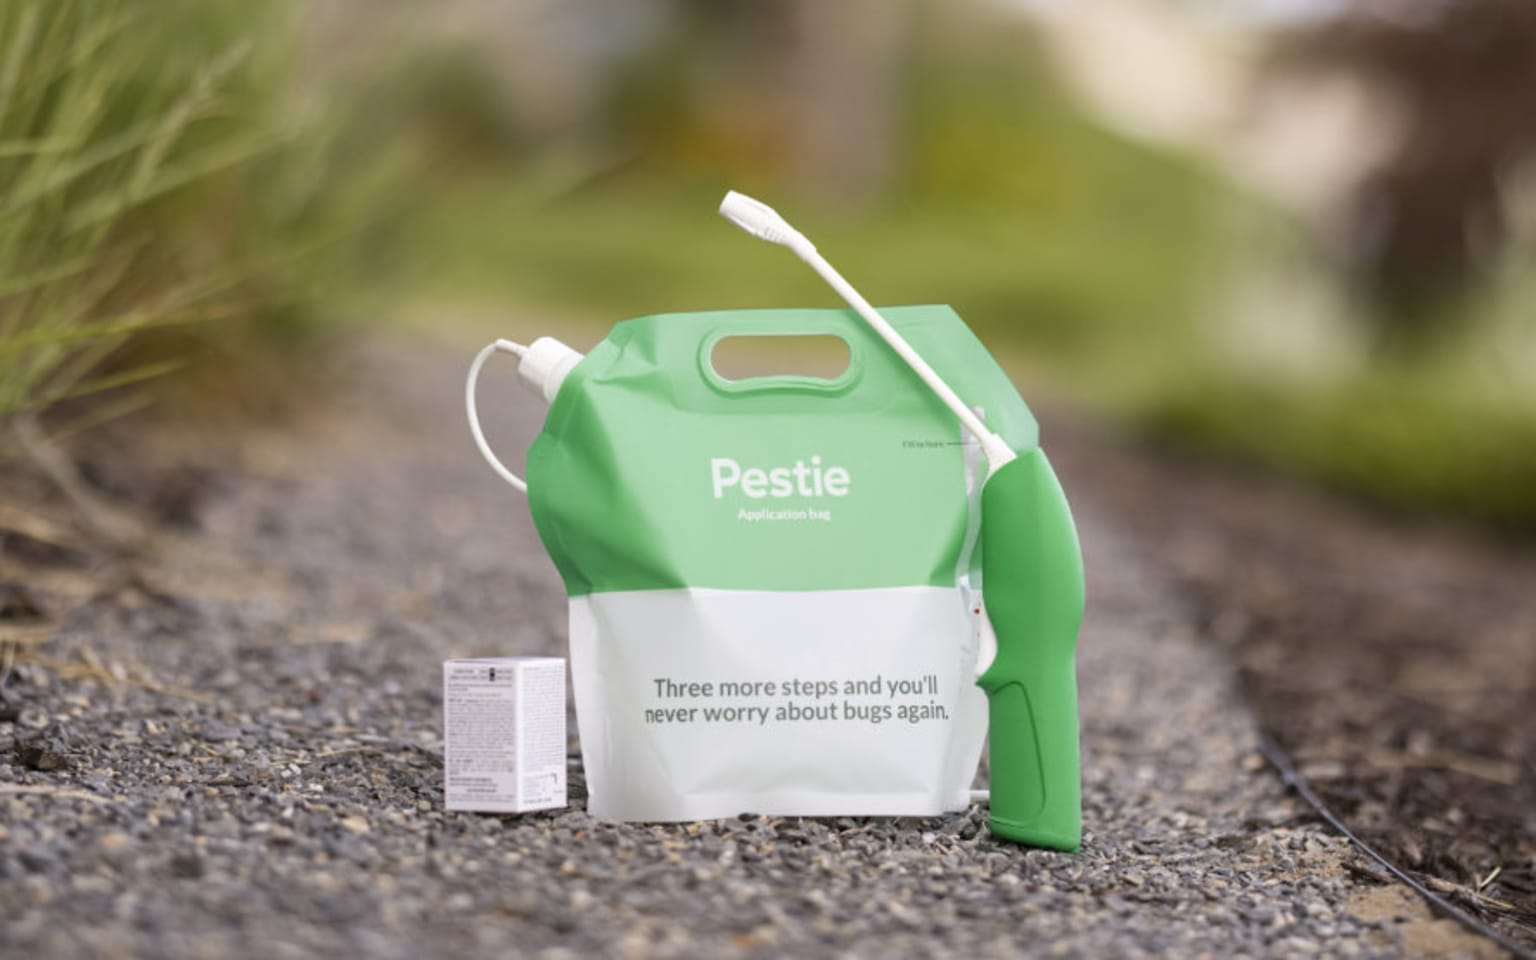 Pestie smart pest plan application bundle